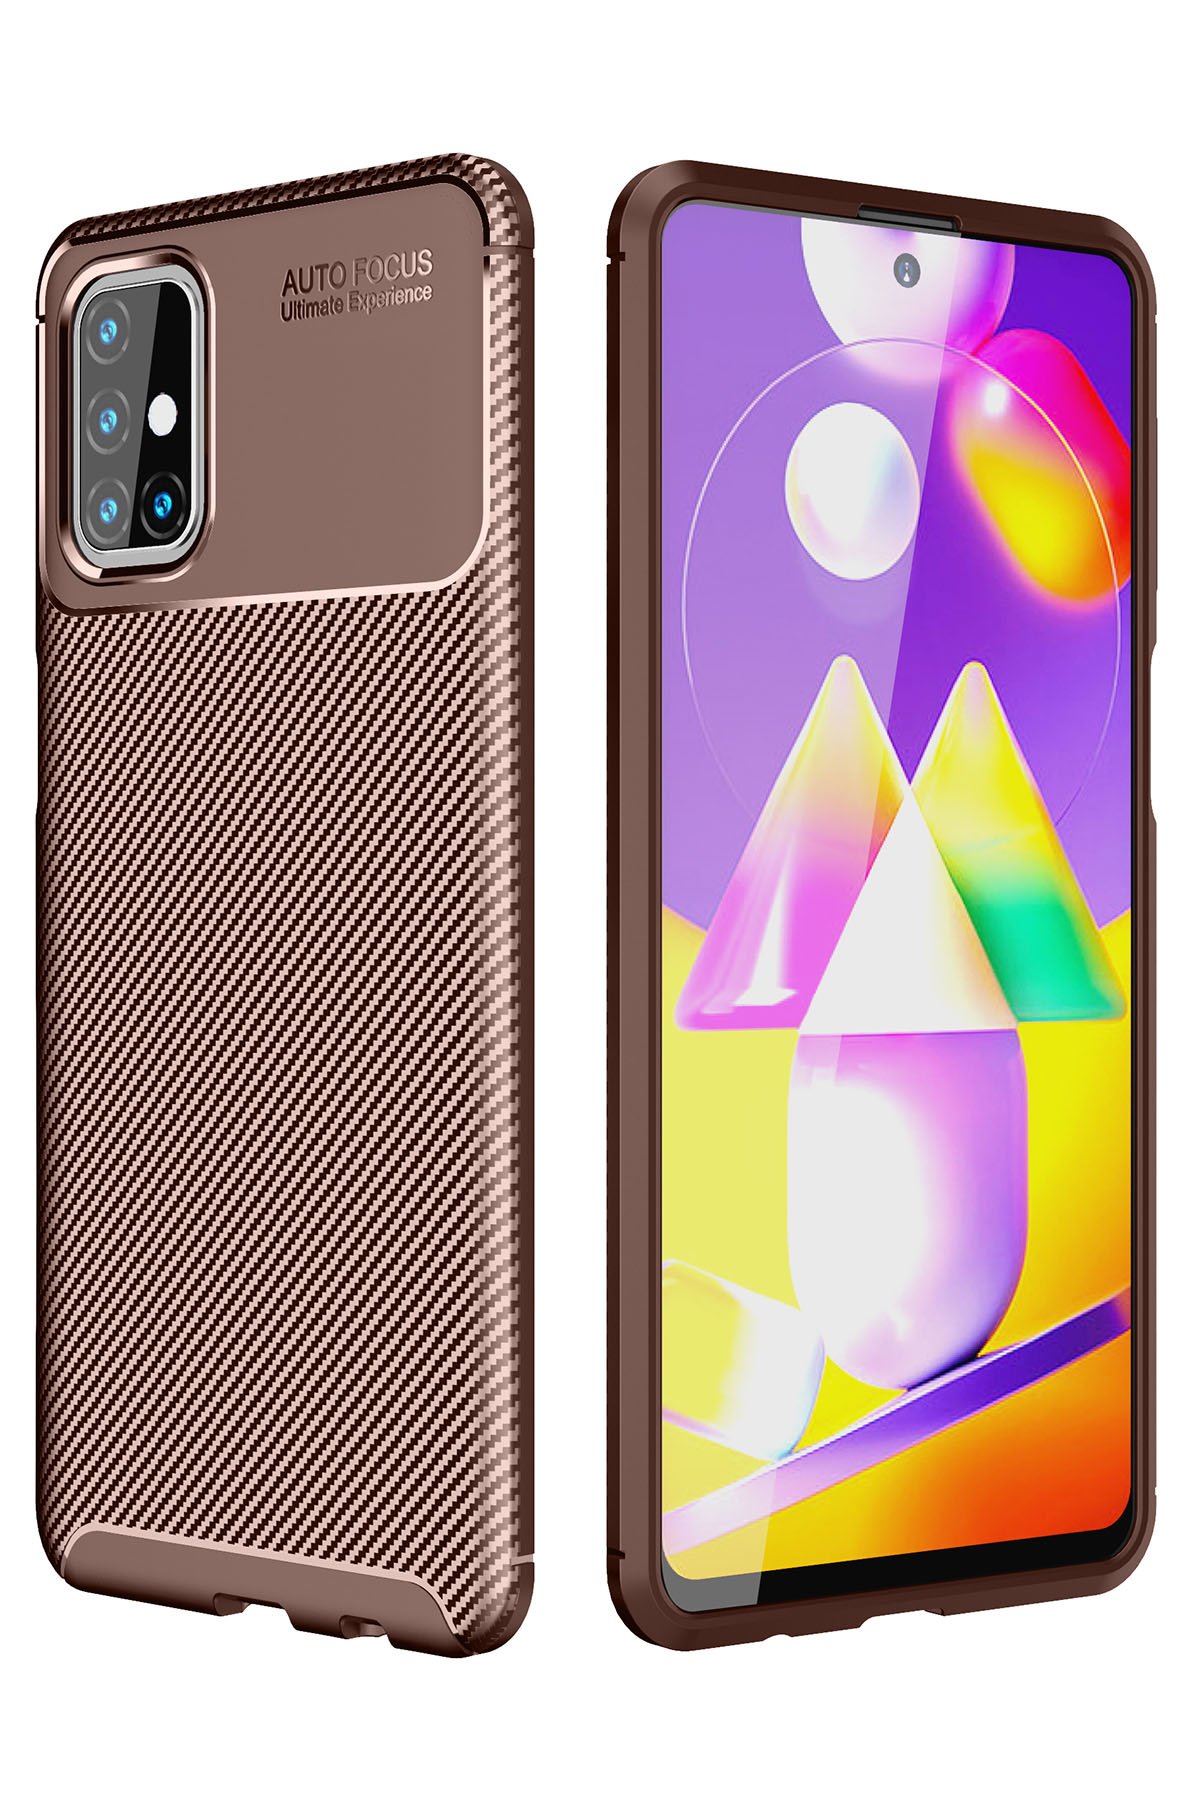 Newface Samsung Galaxy M31S Kılıf S Silikon - Şeffaf